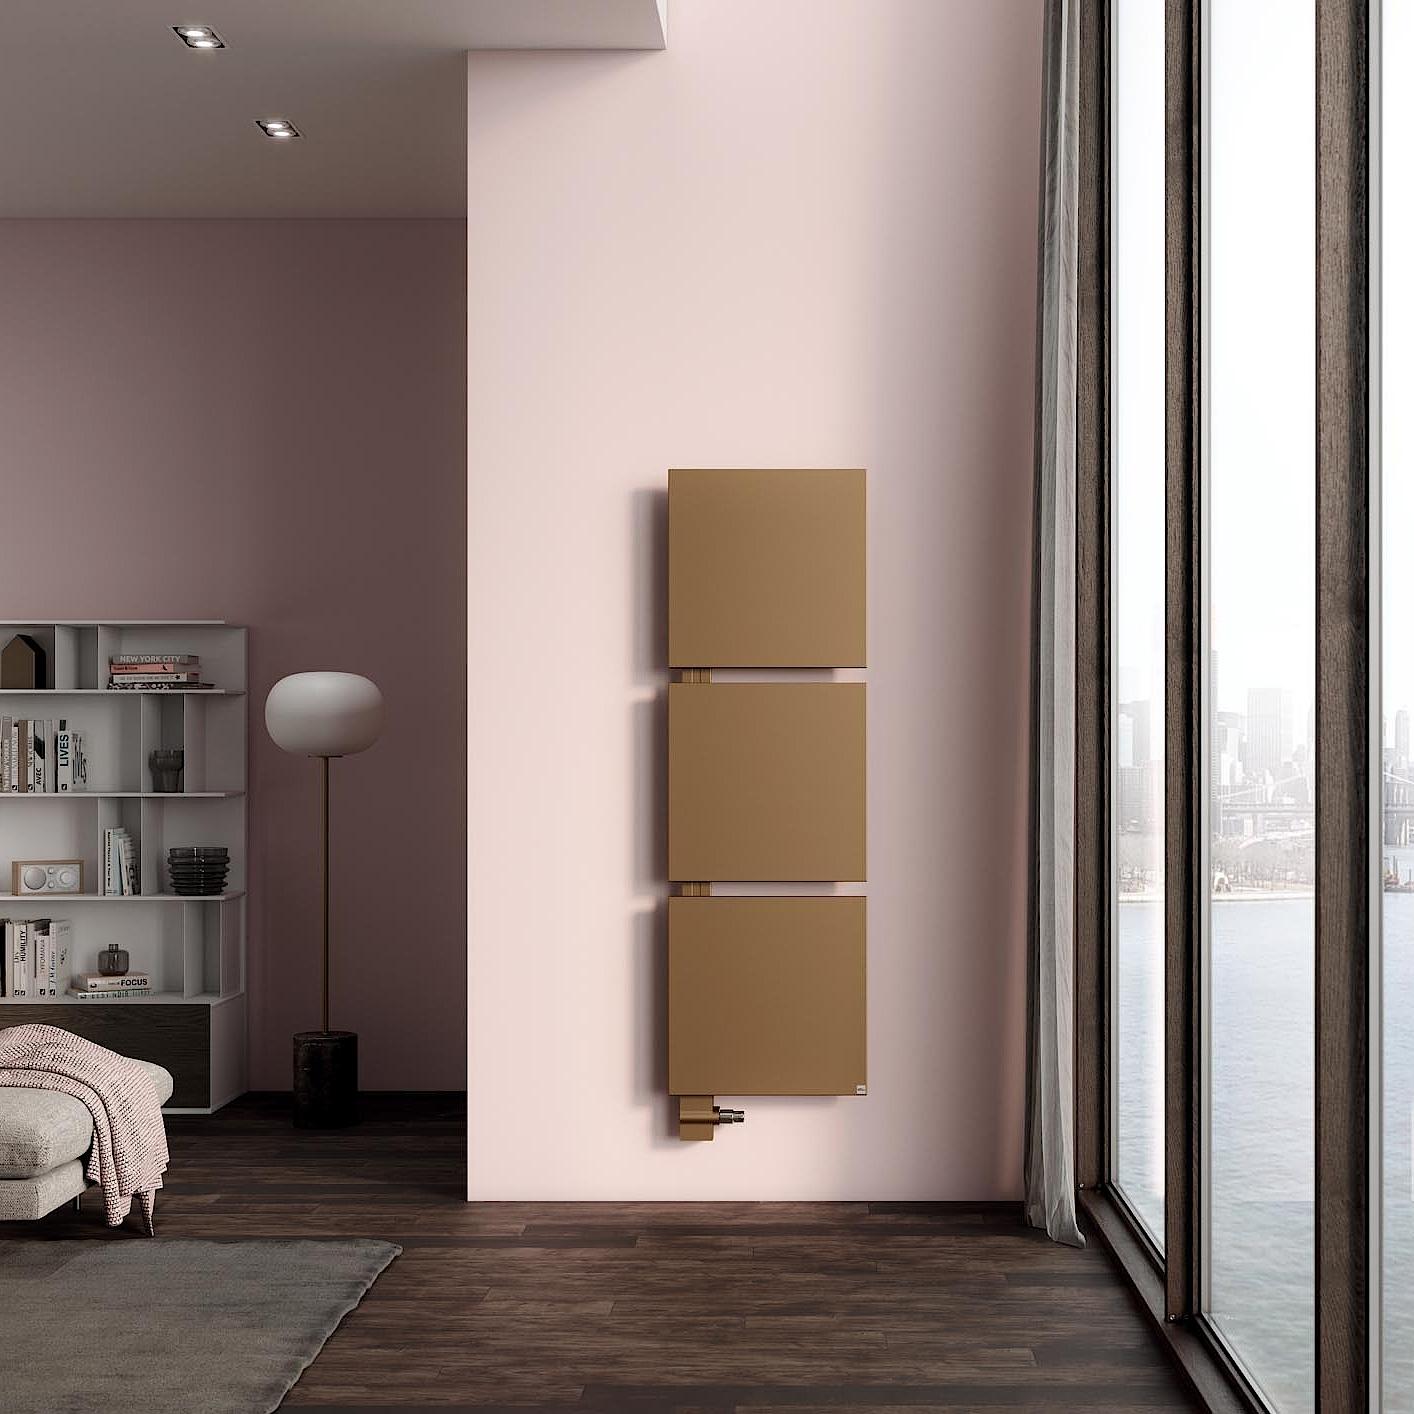 Kermi Signo design and bathroom radiators – clear lines and pure aesthetics.